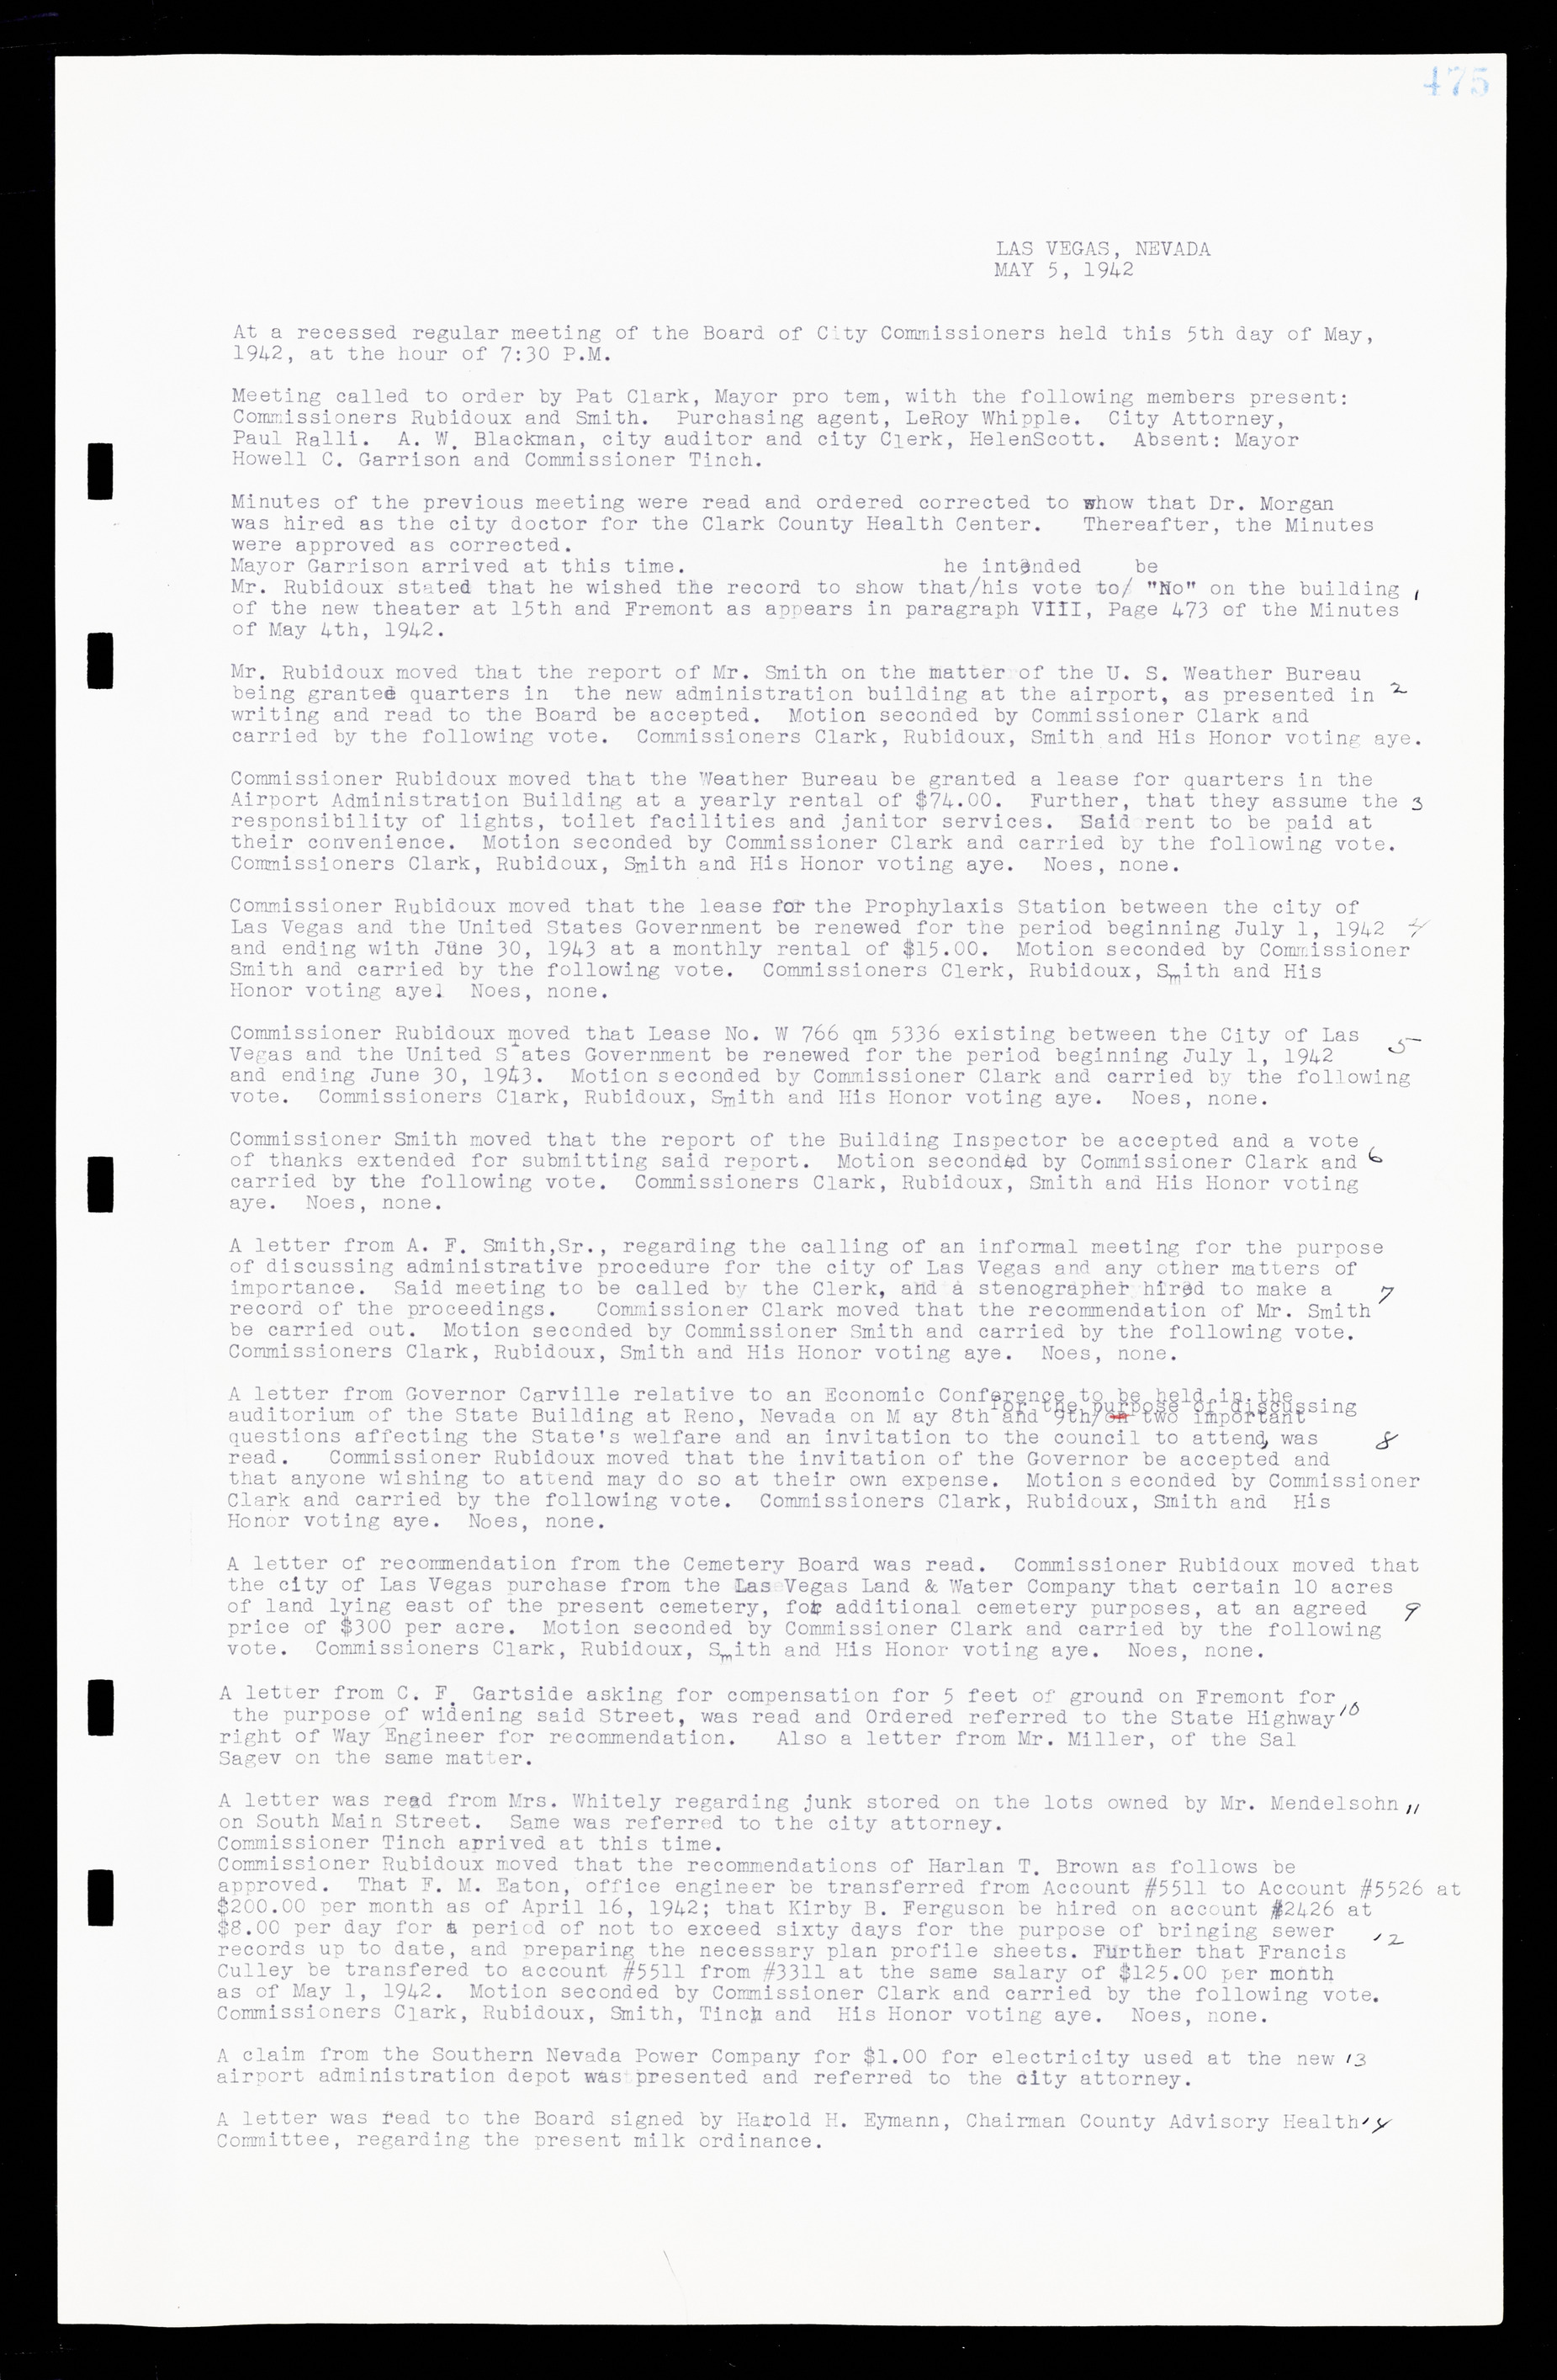 Las Vegas City Commission Minutes, February 17, 1937 to August 4, 1942, lvc000004-503